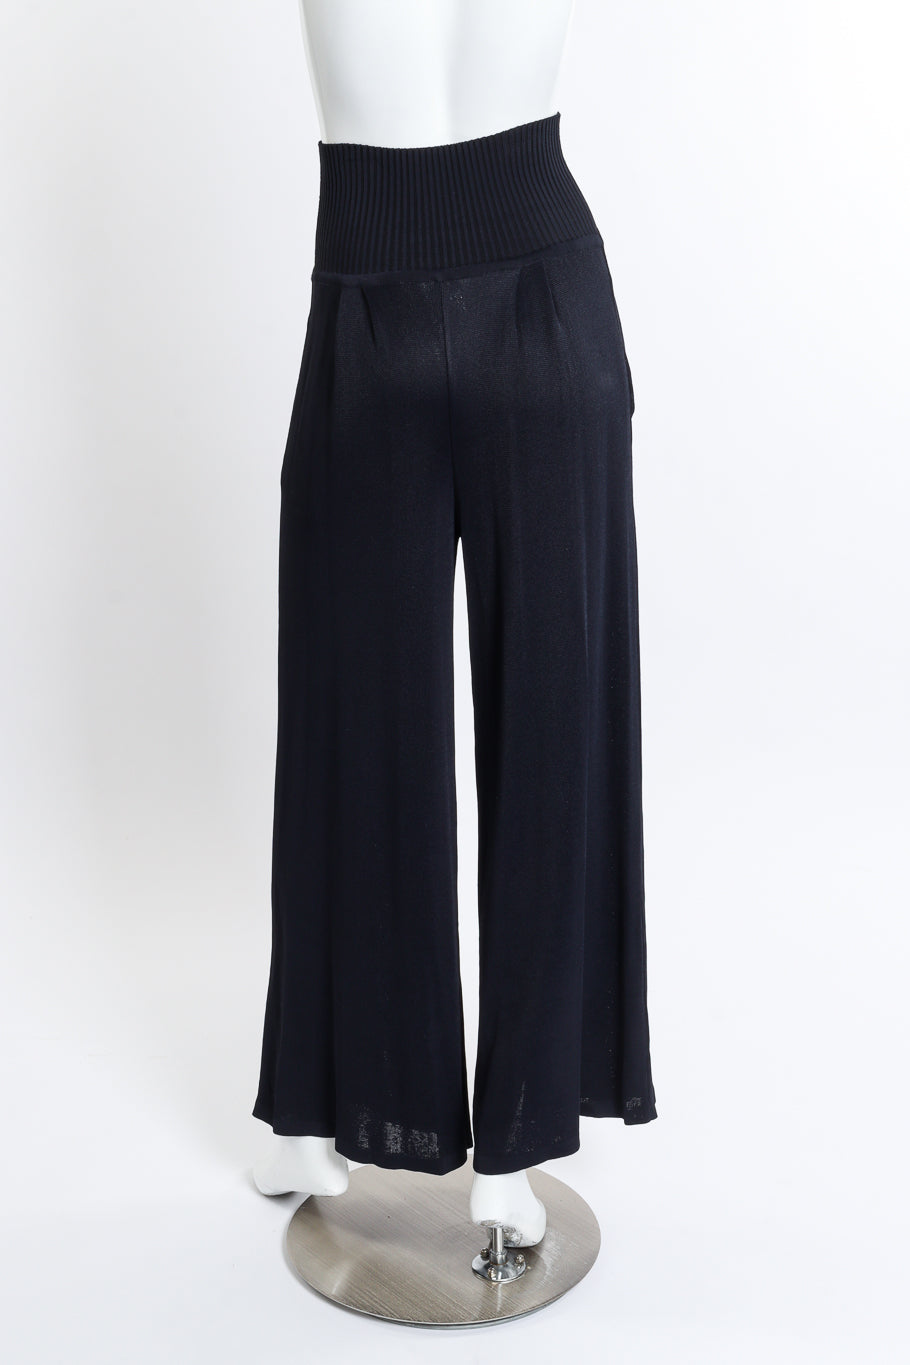 Vintage Chanel High Waist Knit Pant back on mannequin @recess la